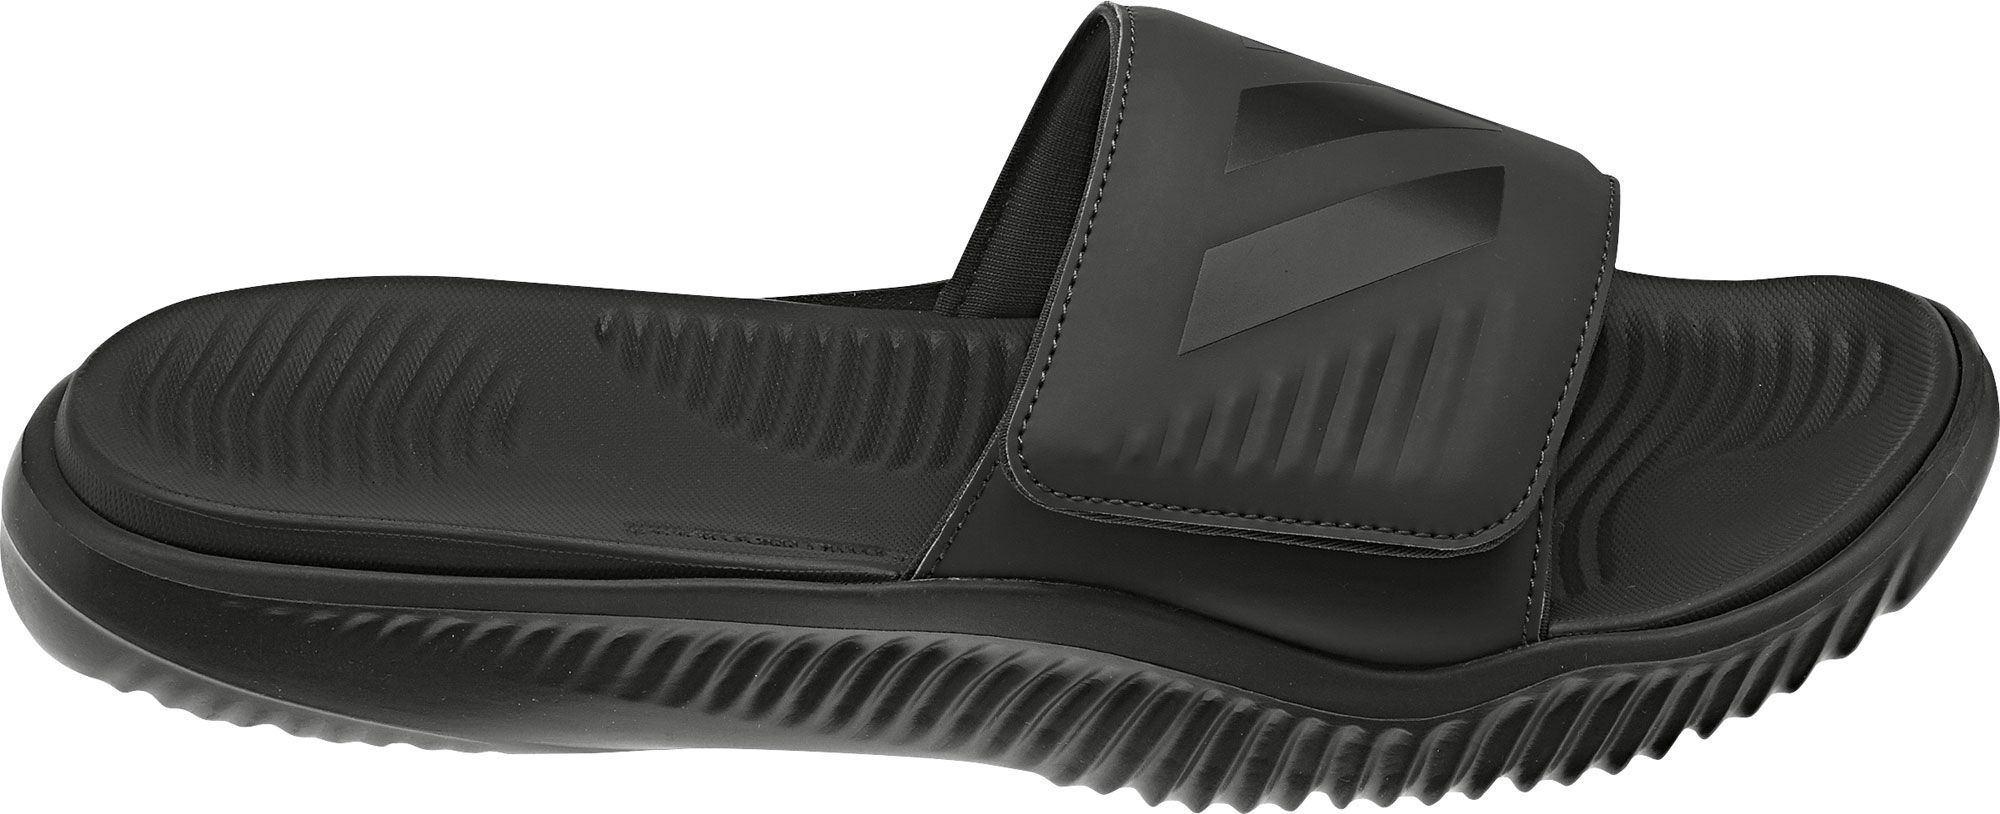 adidas black sandals